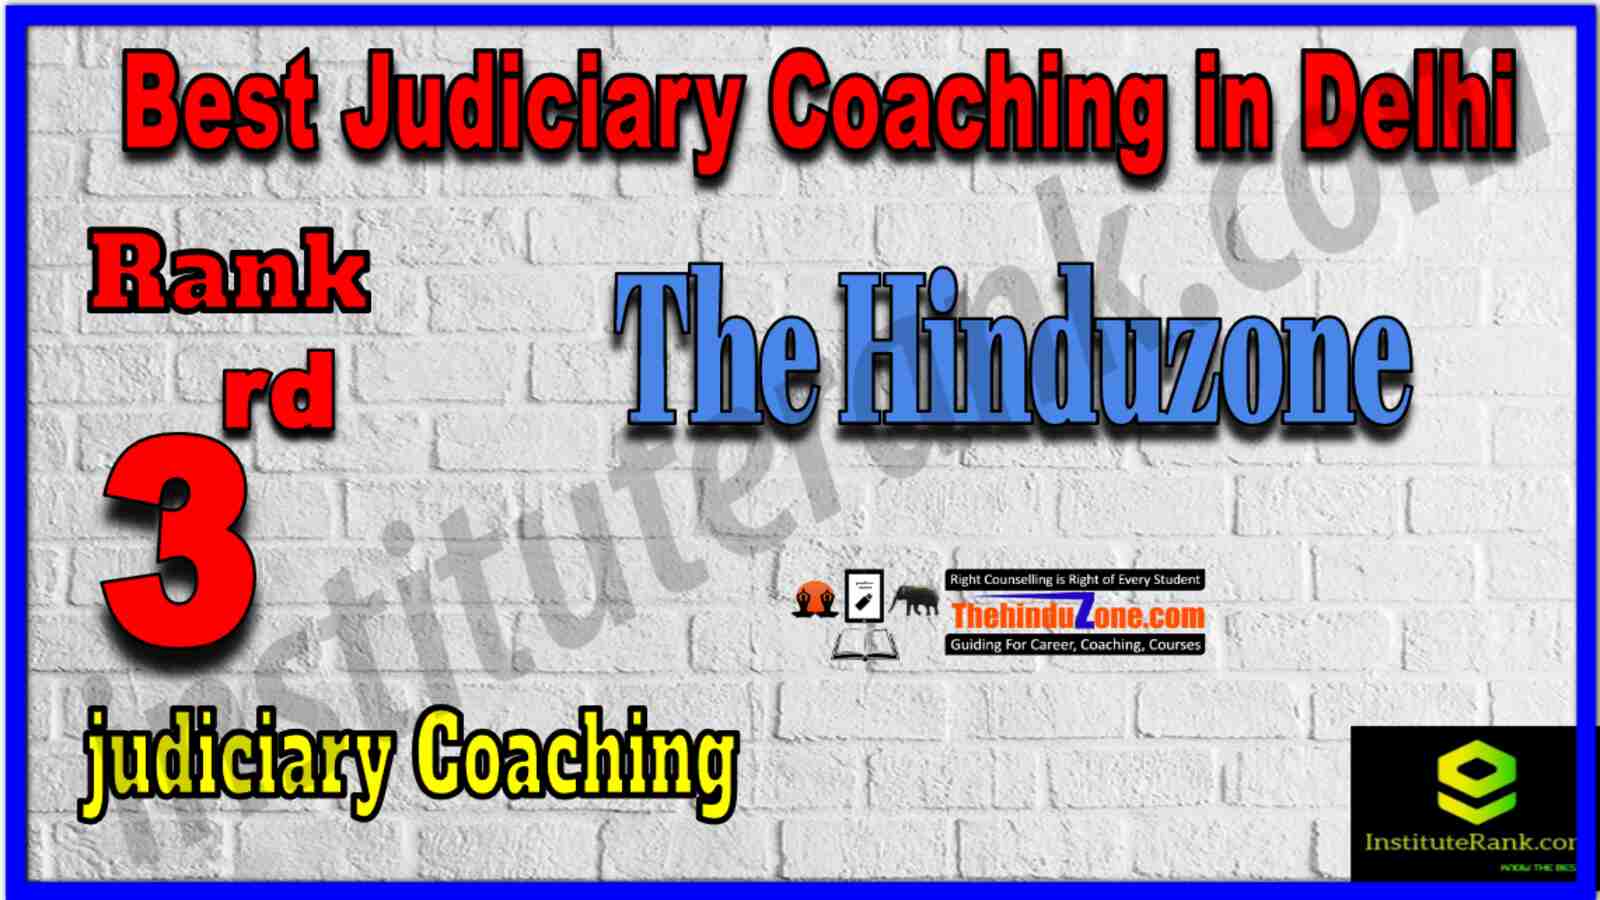 Rank 3 Best Judiciary Coaching in Delhi